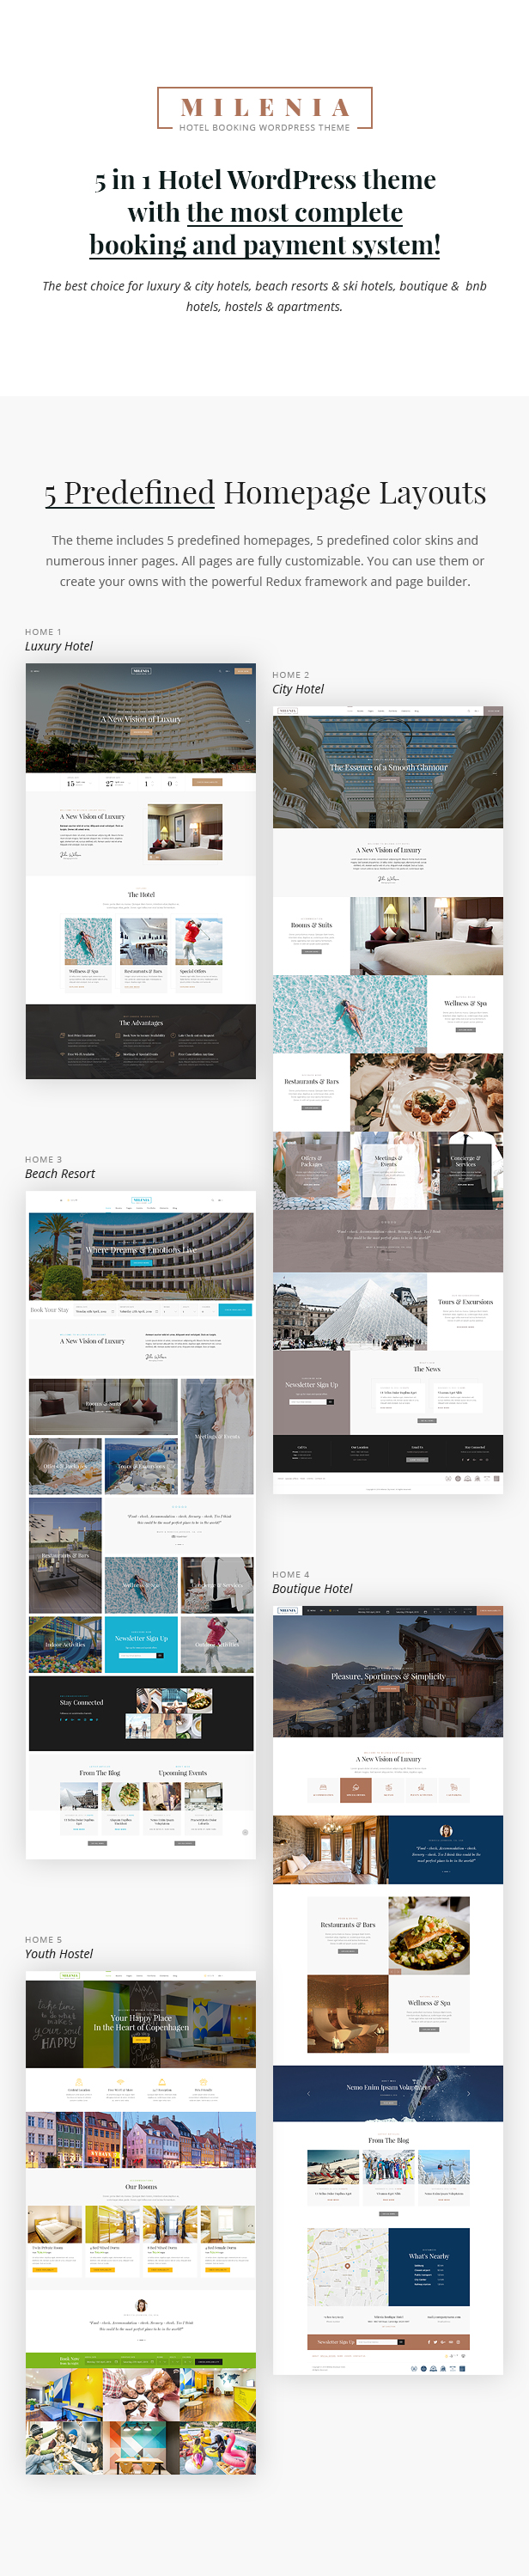 Milenia - Hotel & Booking WordPress Theme - 1